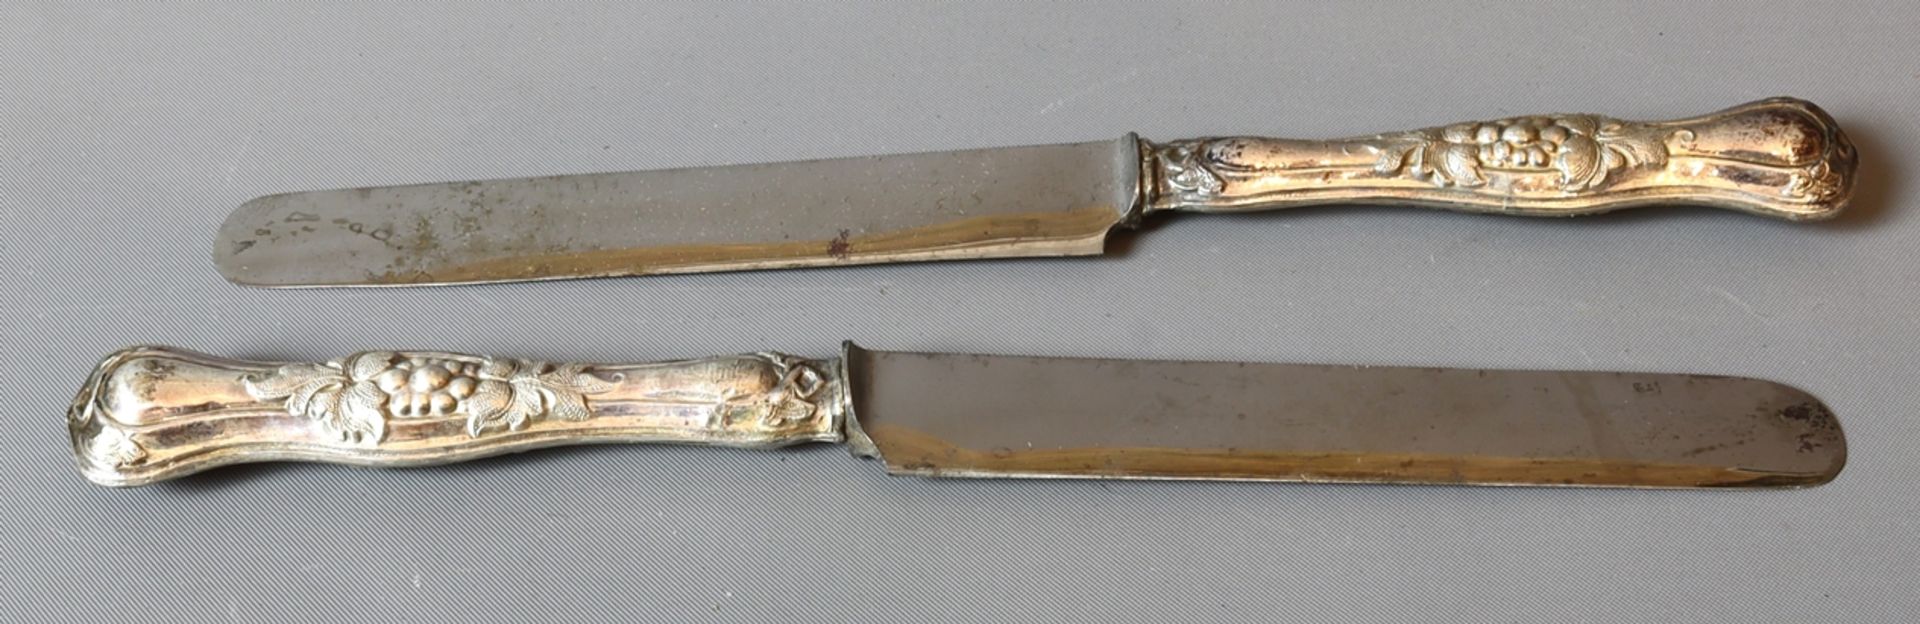 6 silver fruit knives, Historism circa 1880-1900, German - Image 3 of 4